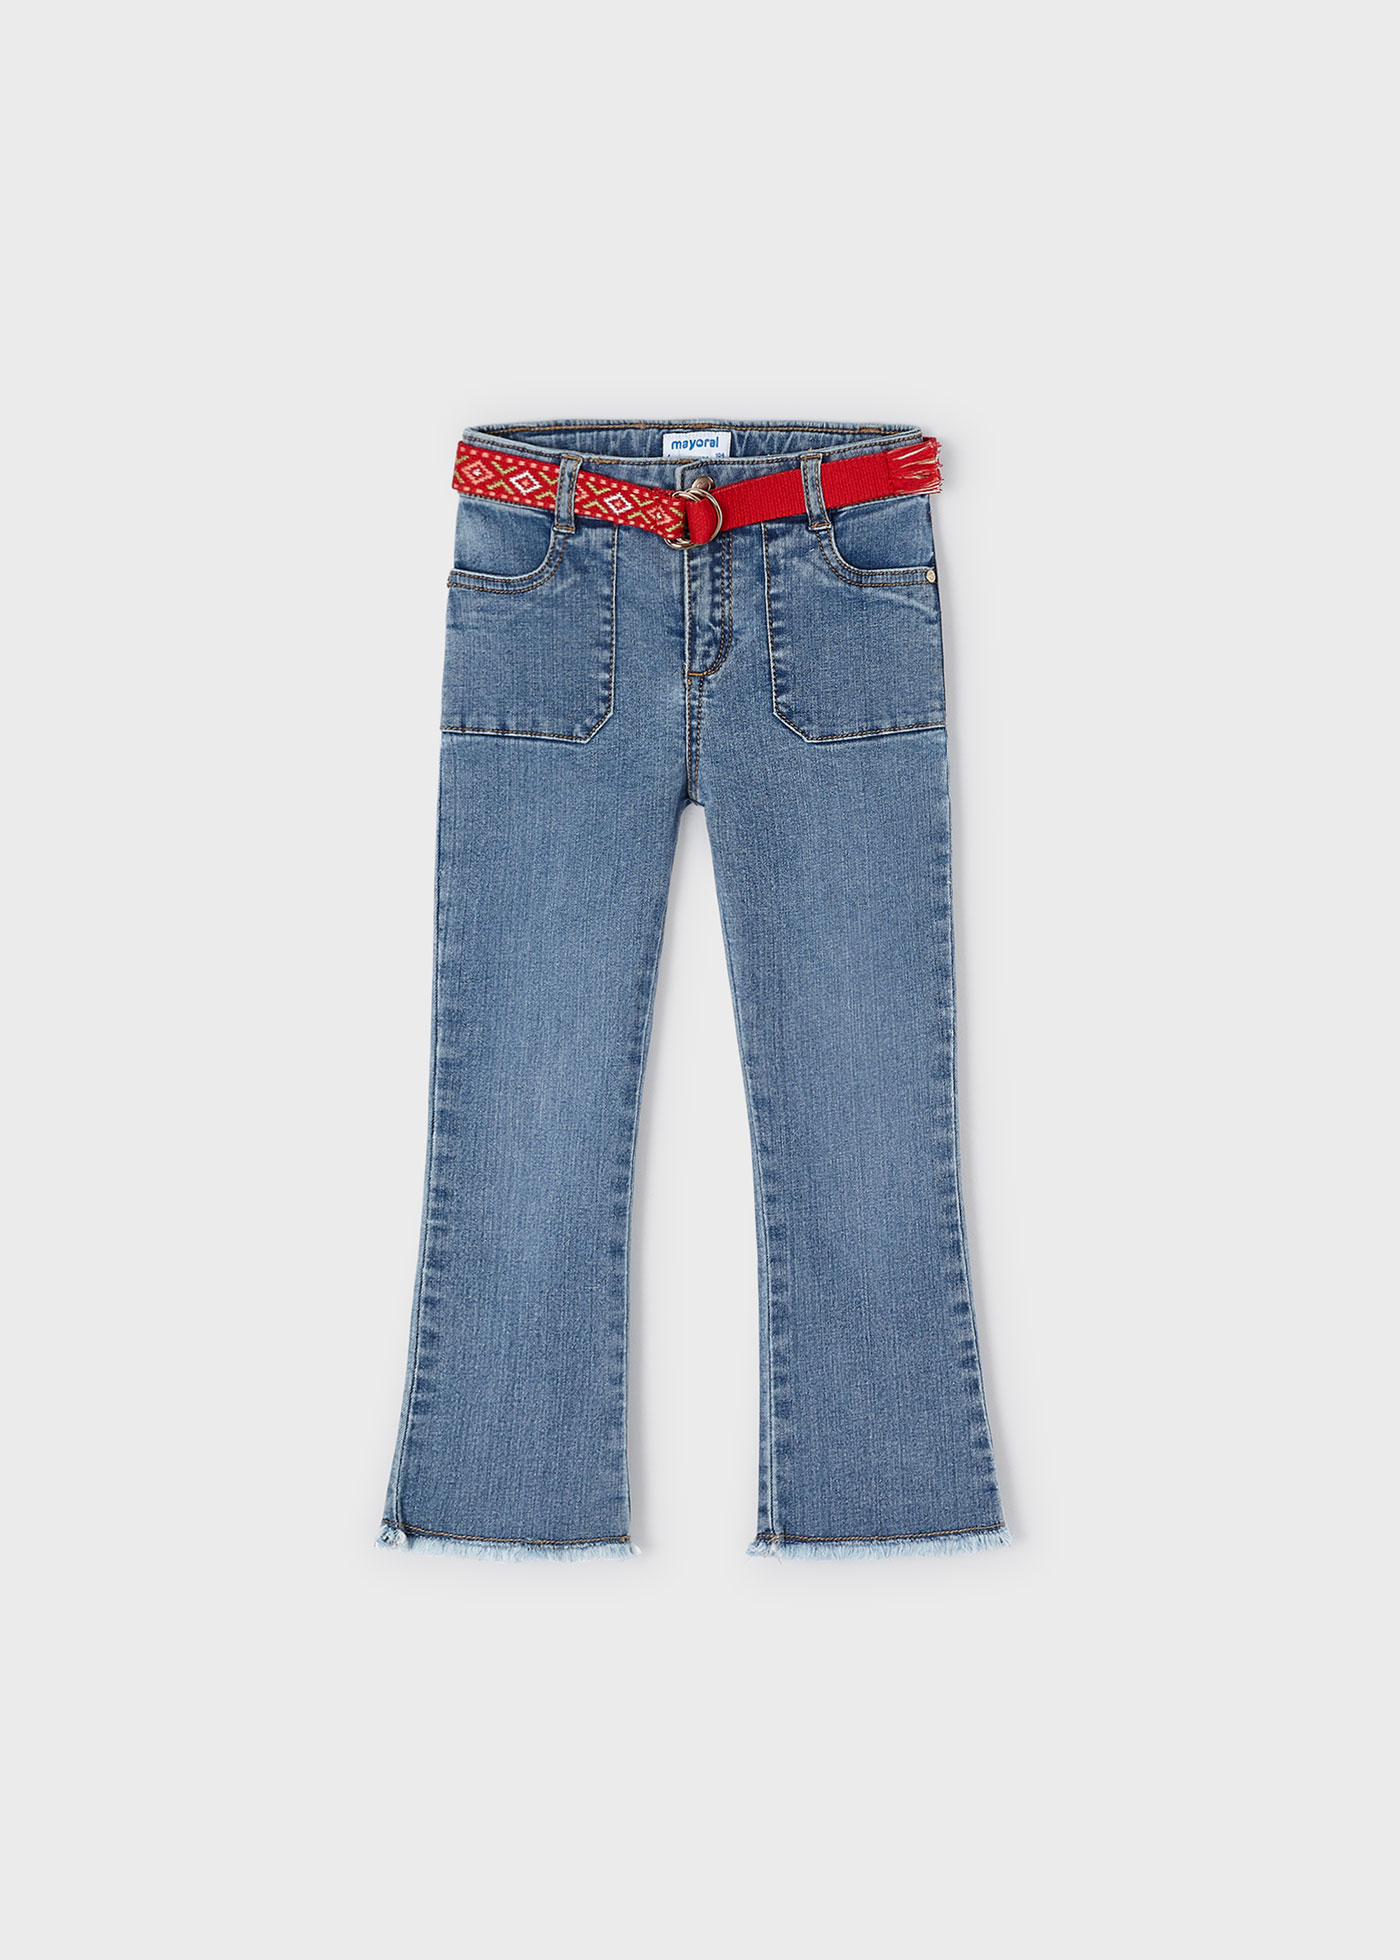 578 Mayoral Tween/Teen Girls Basic Denim Jeans, Pull on Waistband